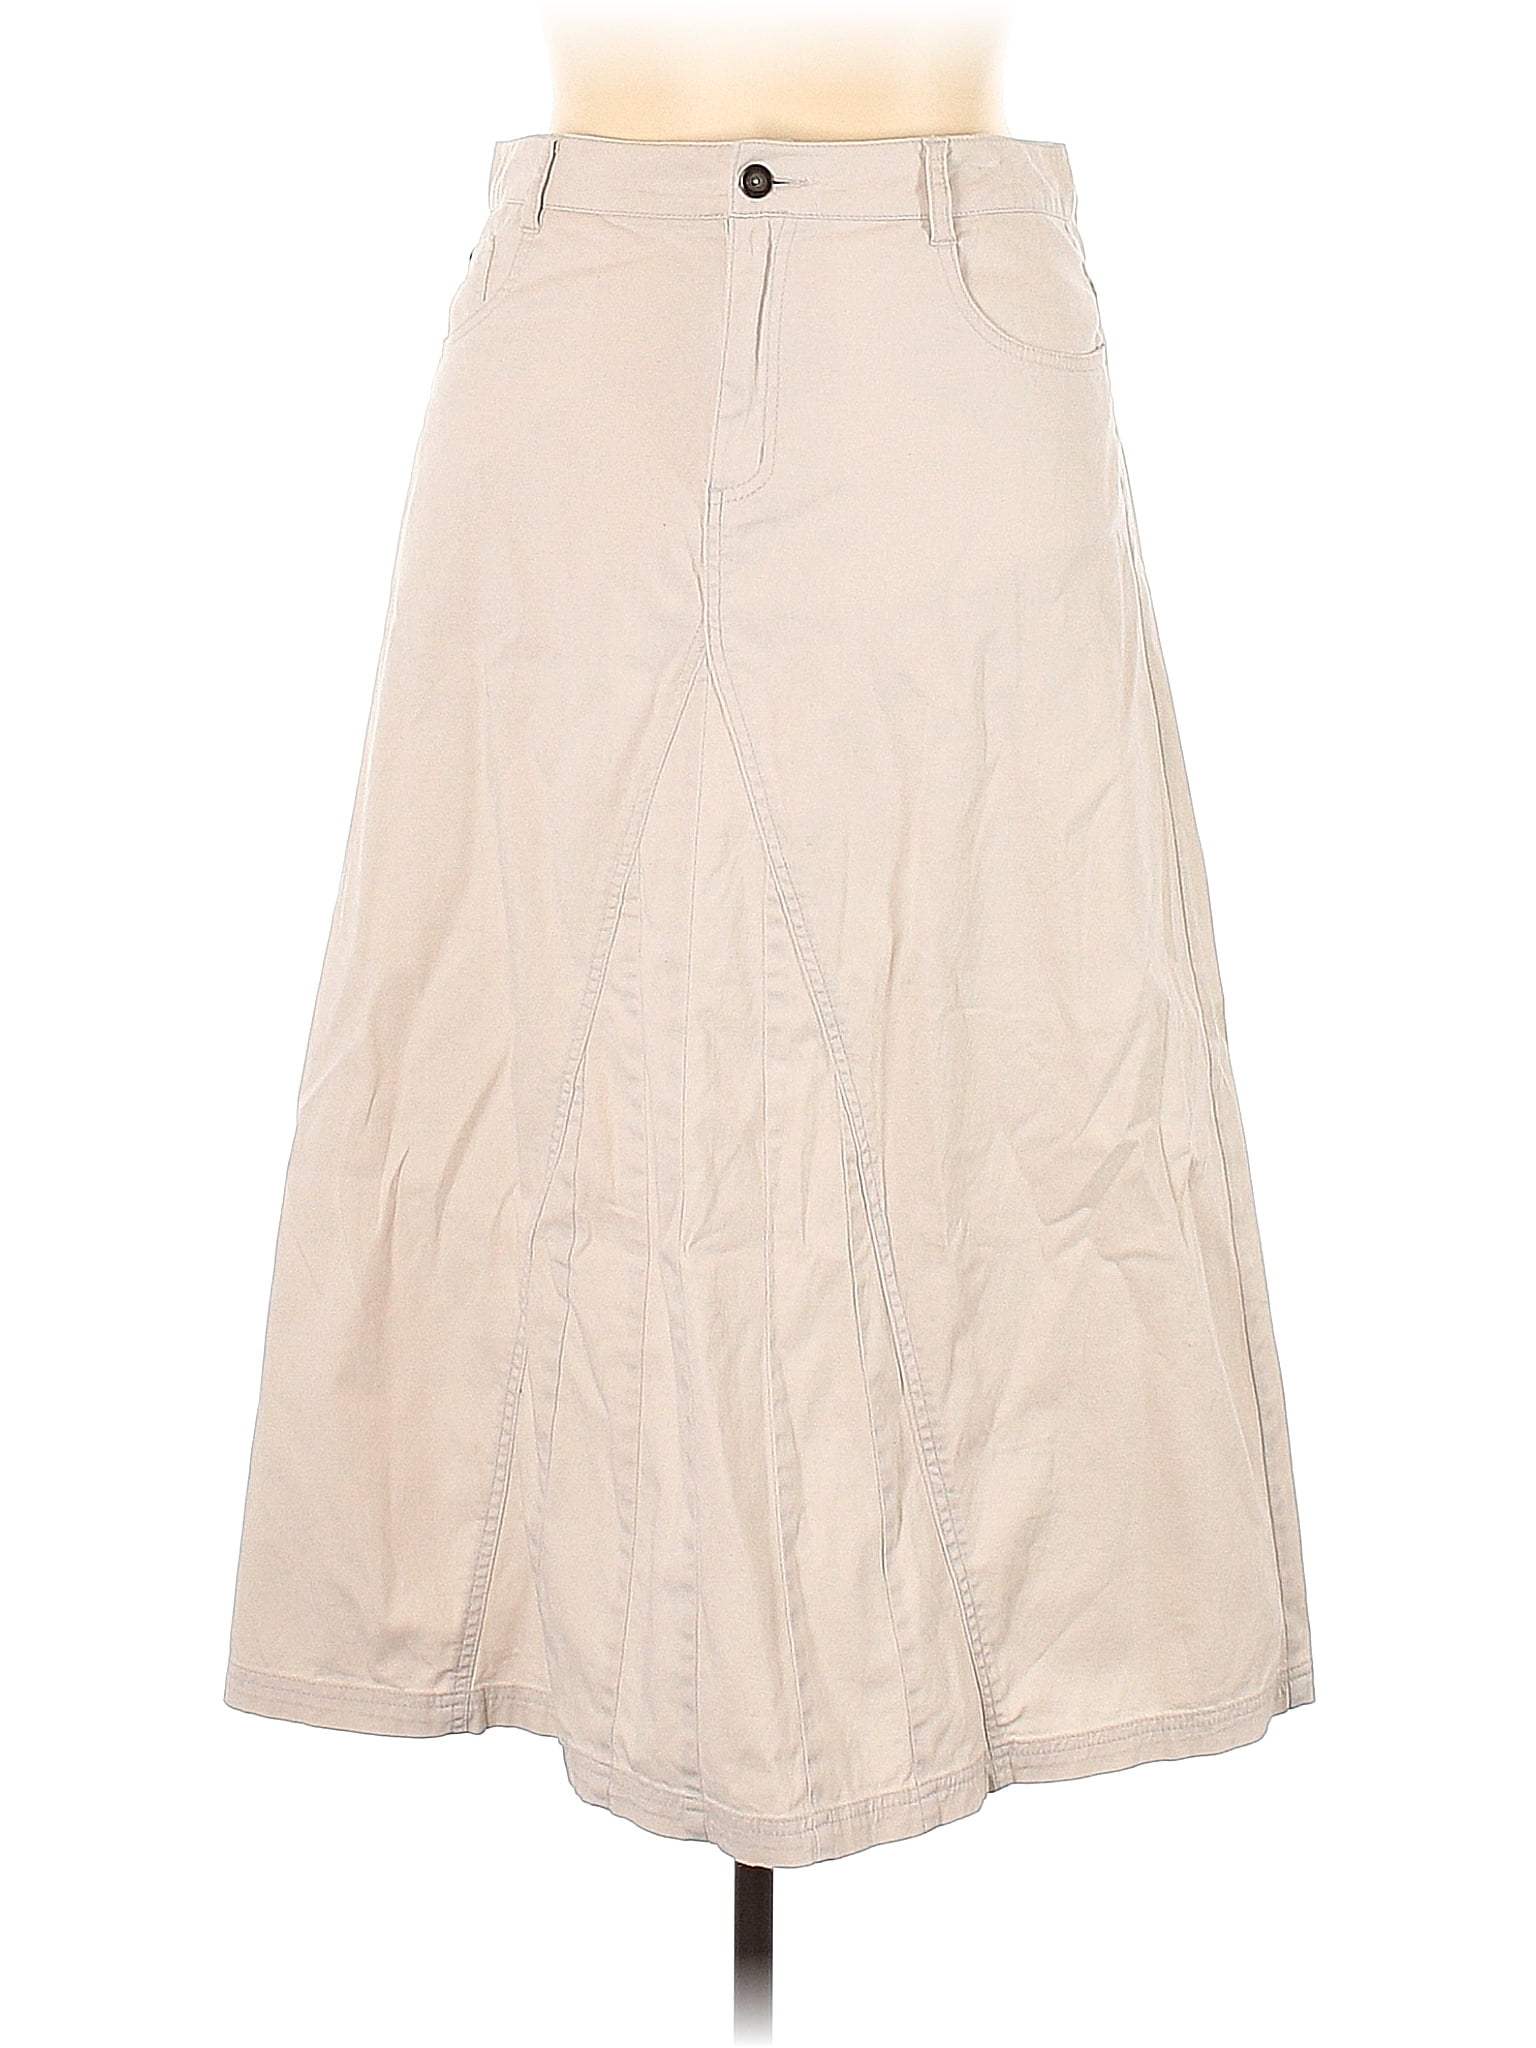 Cato Solid Tan Denim Skirt Size 14 - 25% off | thredUP